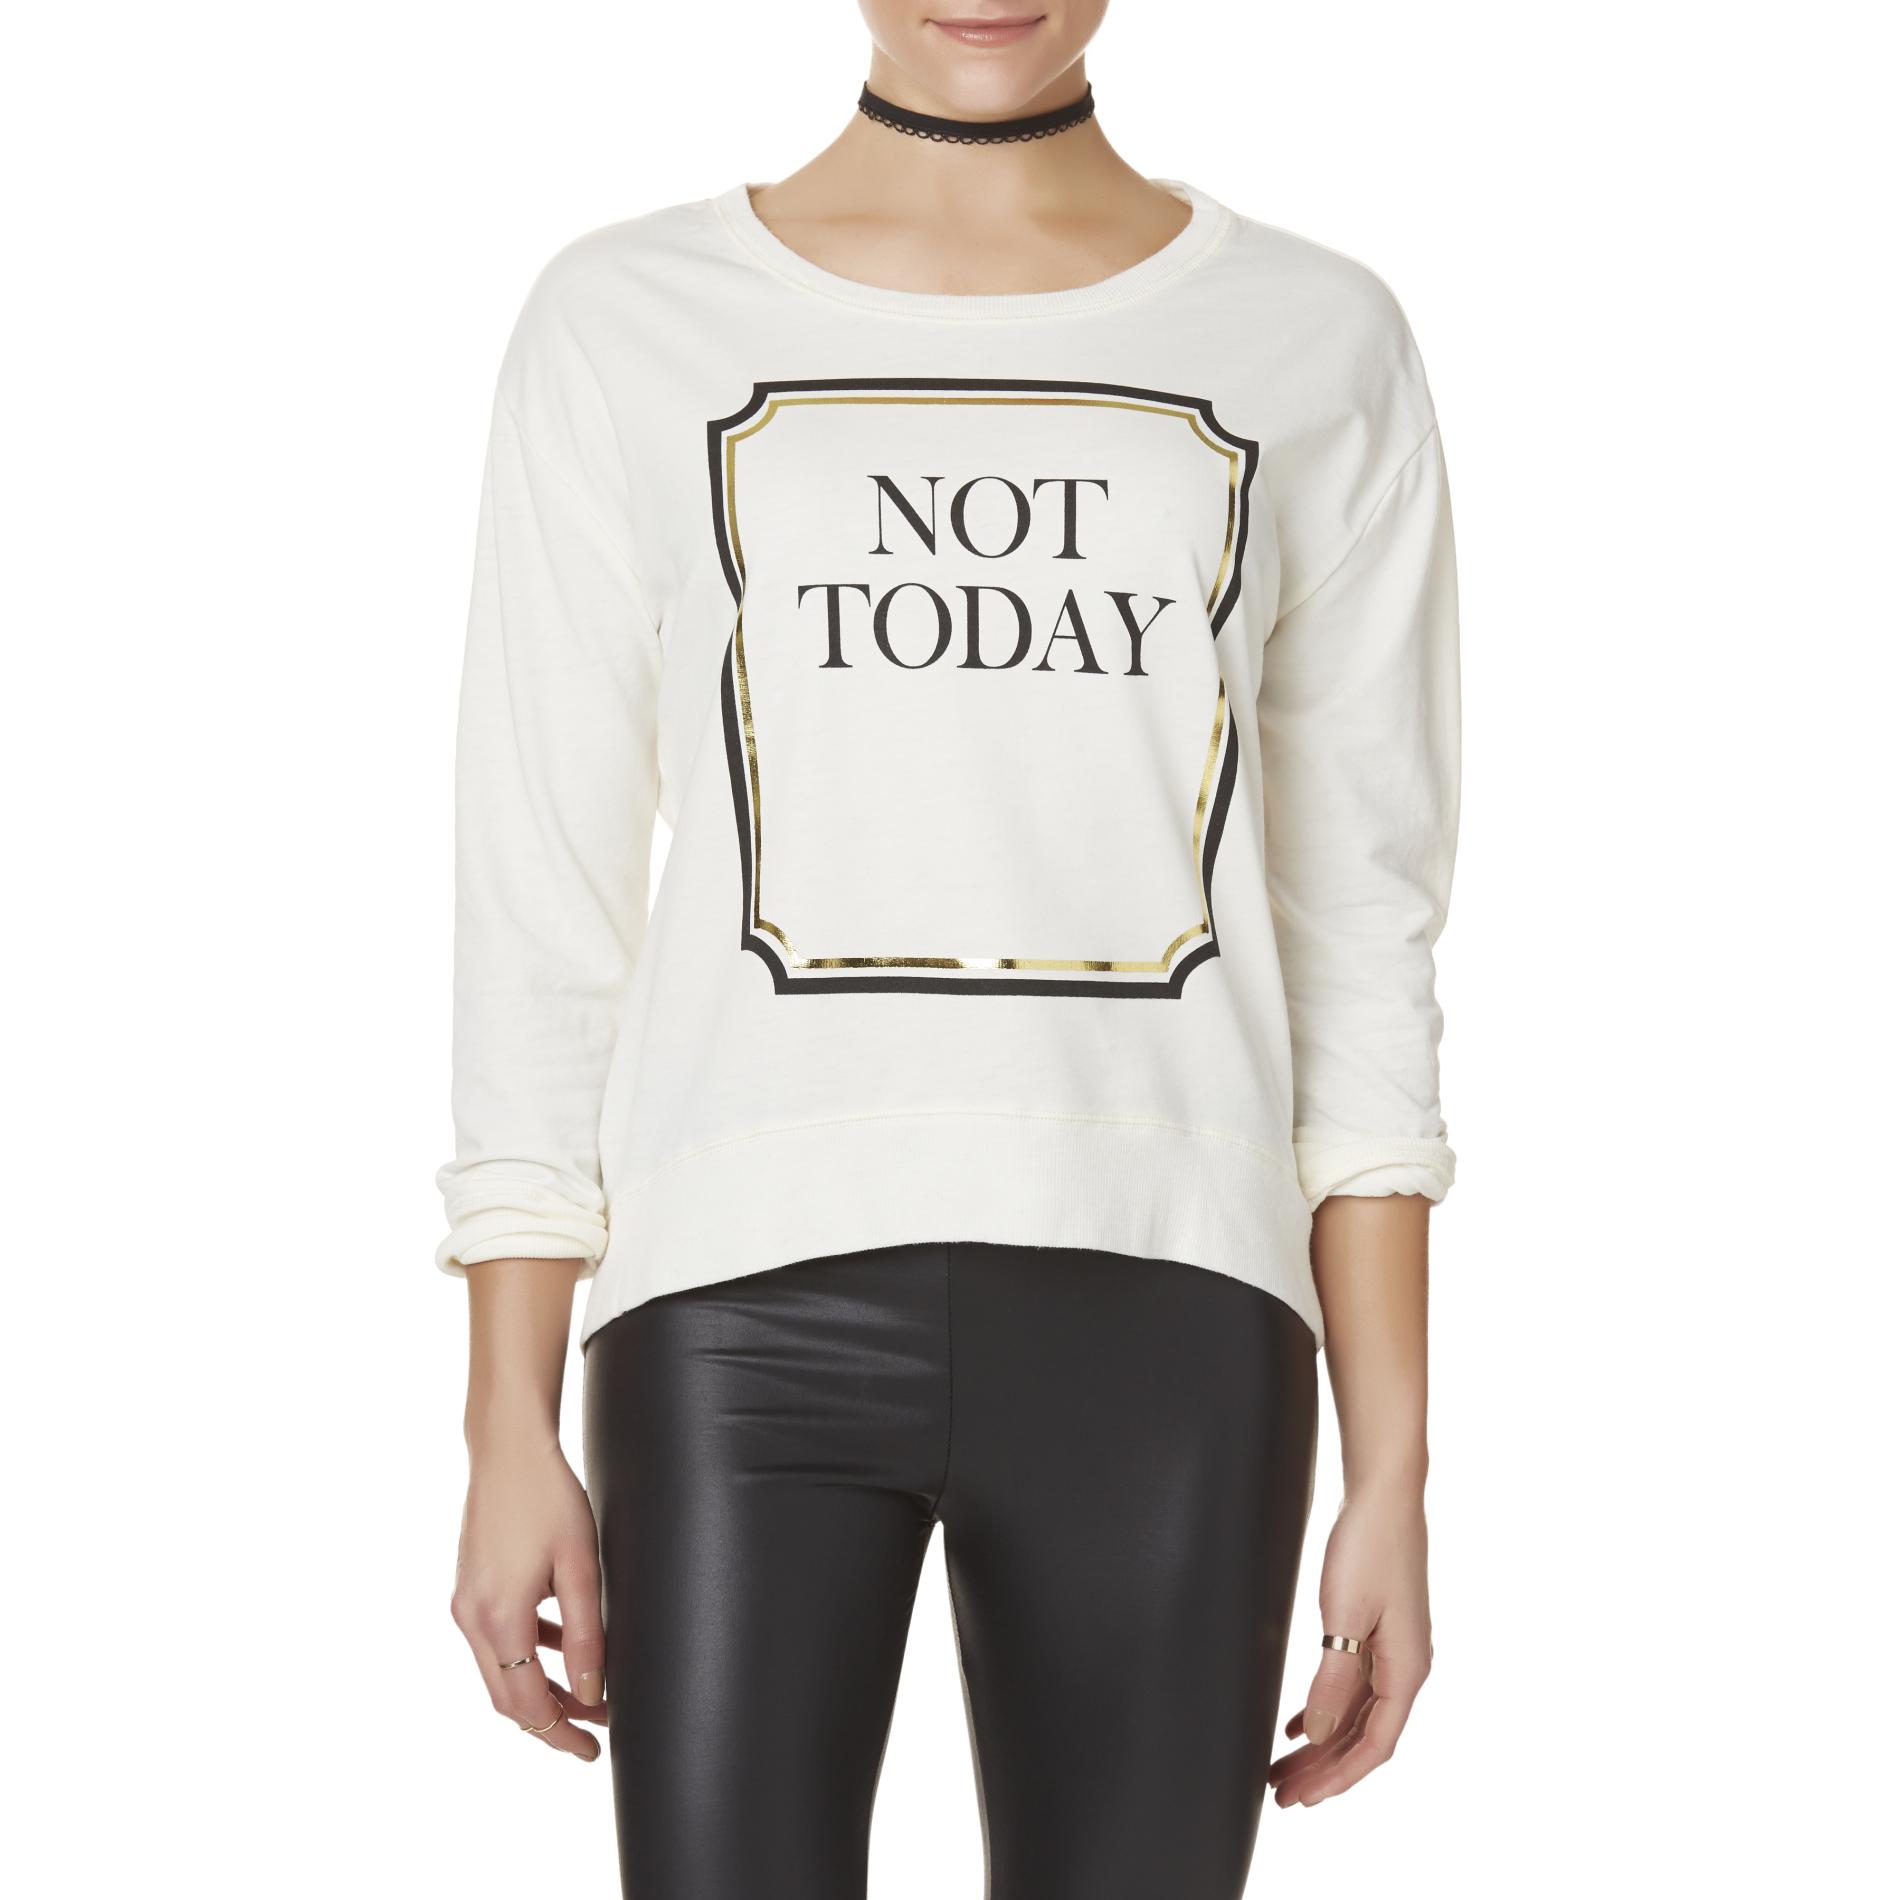 Wild Kiss Juniors' Fashion Sweatshirt - Not Today